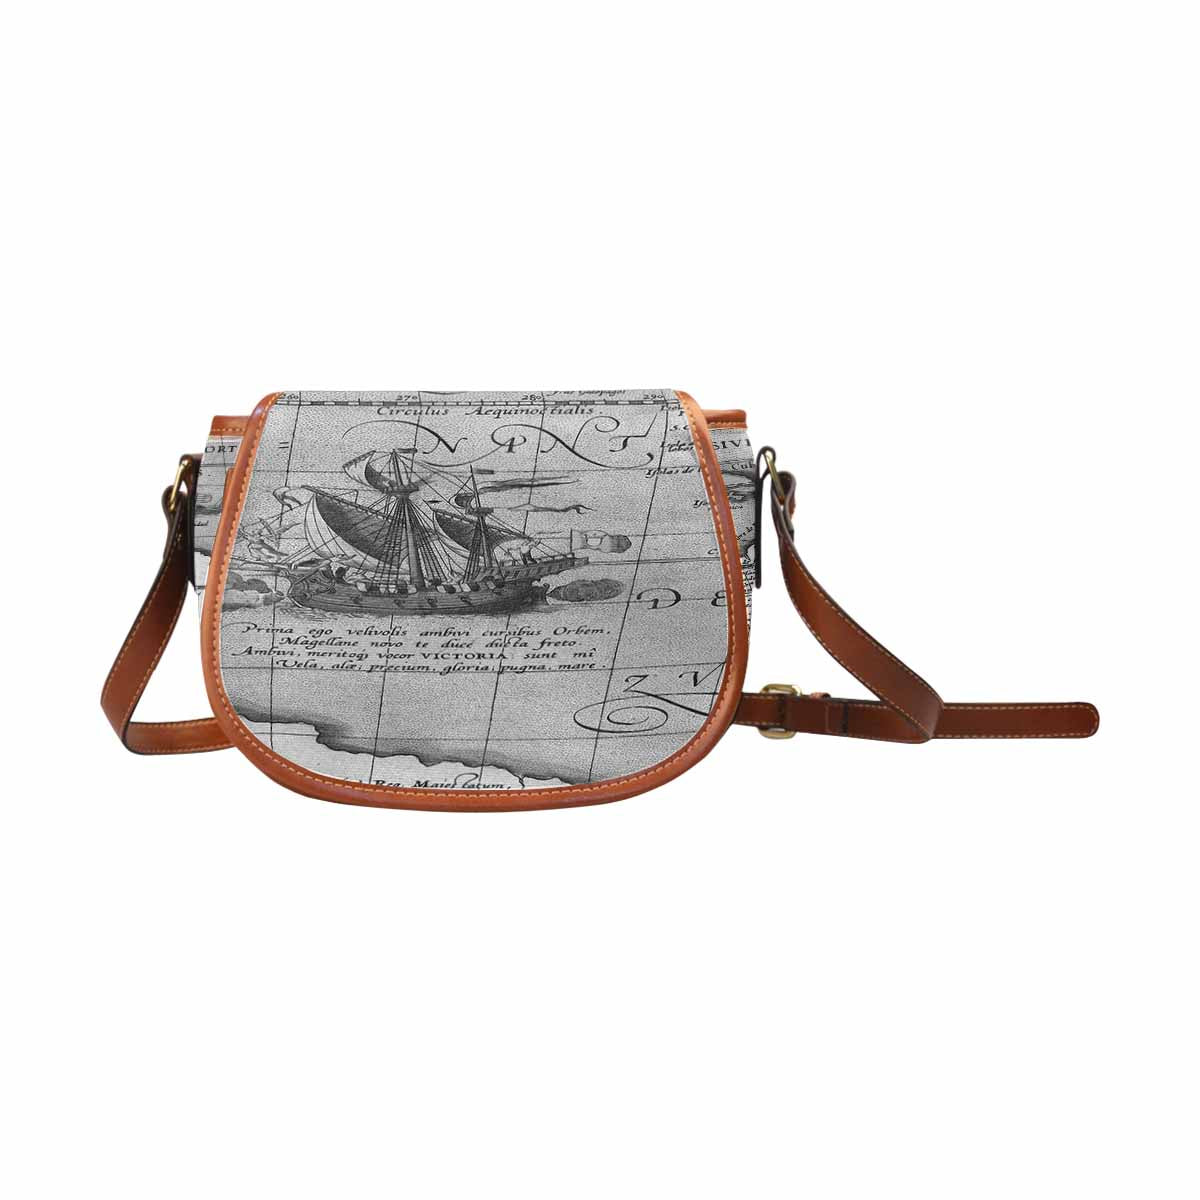 Antique Map design Handbag, saddle bag, Design 44